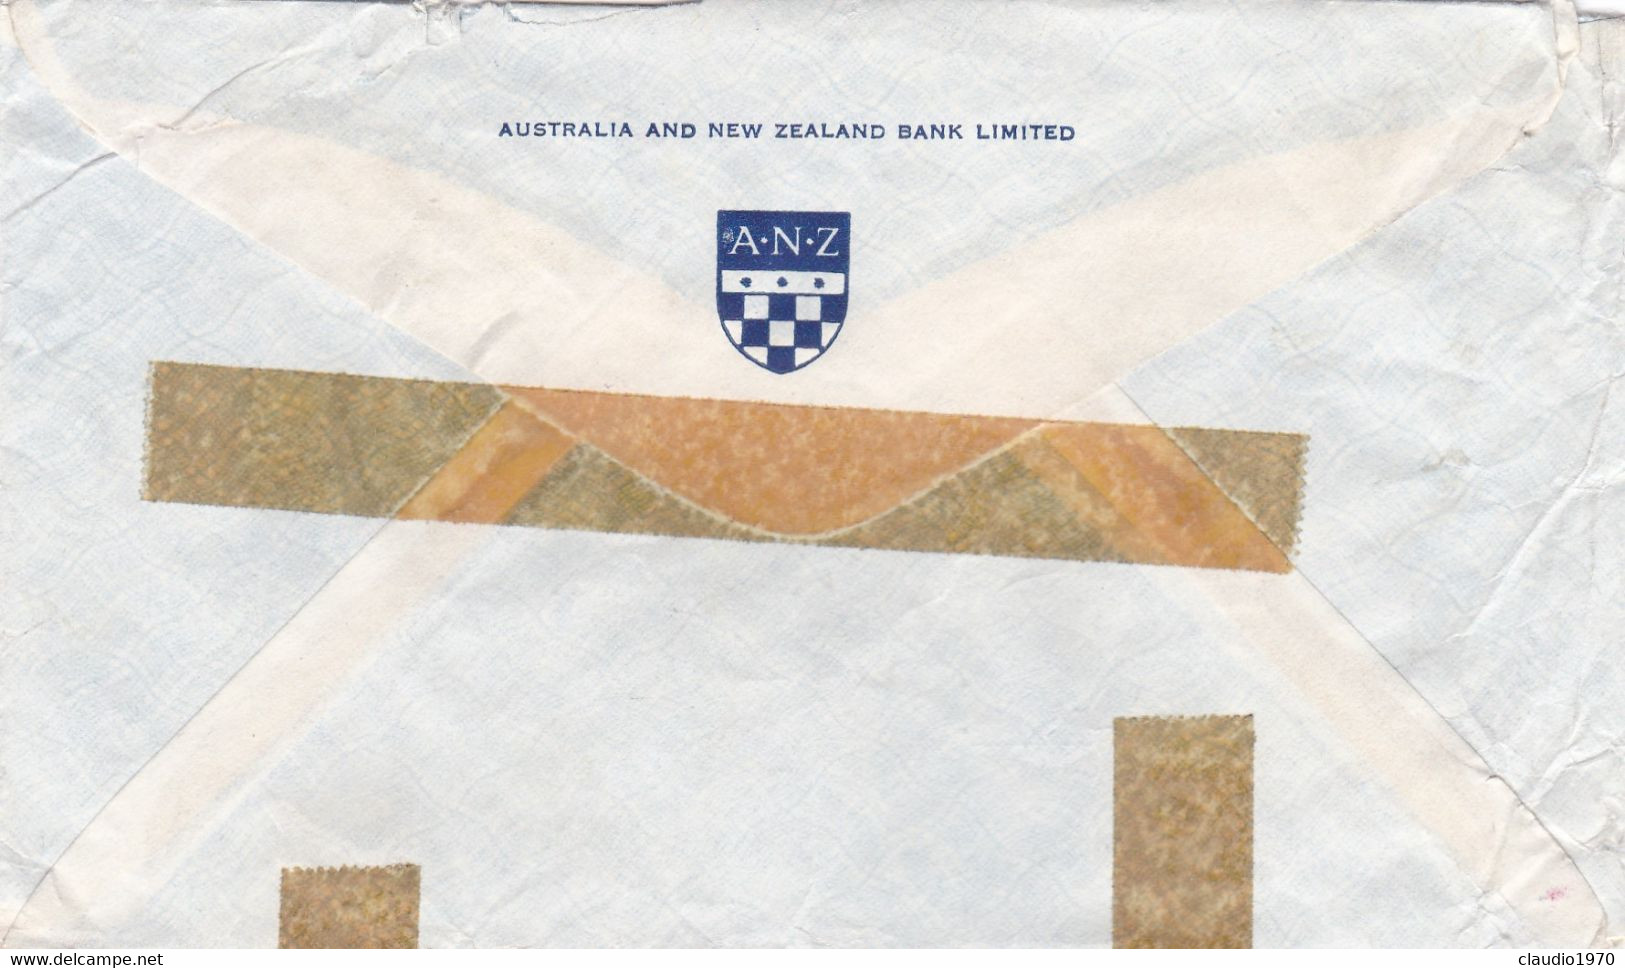 NEW ZEALAND - BUSTA VIAGGIATA BY AIR MAIL -  AUSTRALIA AND NEW ZEALAND BANK LIMITED - VIAGGIATA  PER MILANO - ITALY - Cartas & Documentos